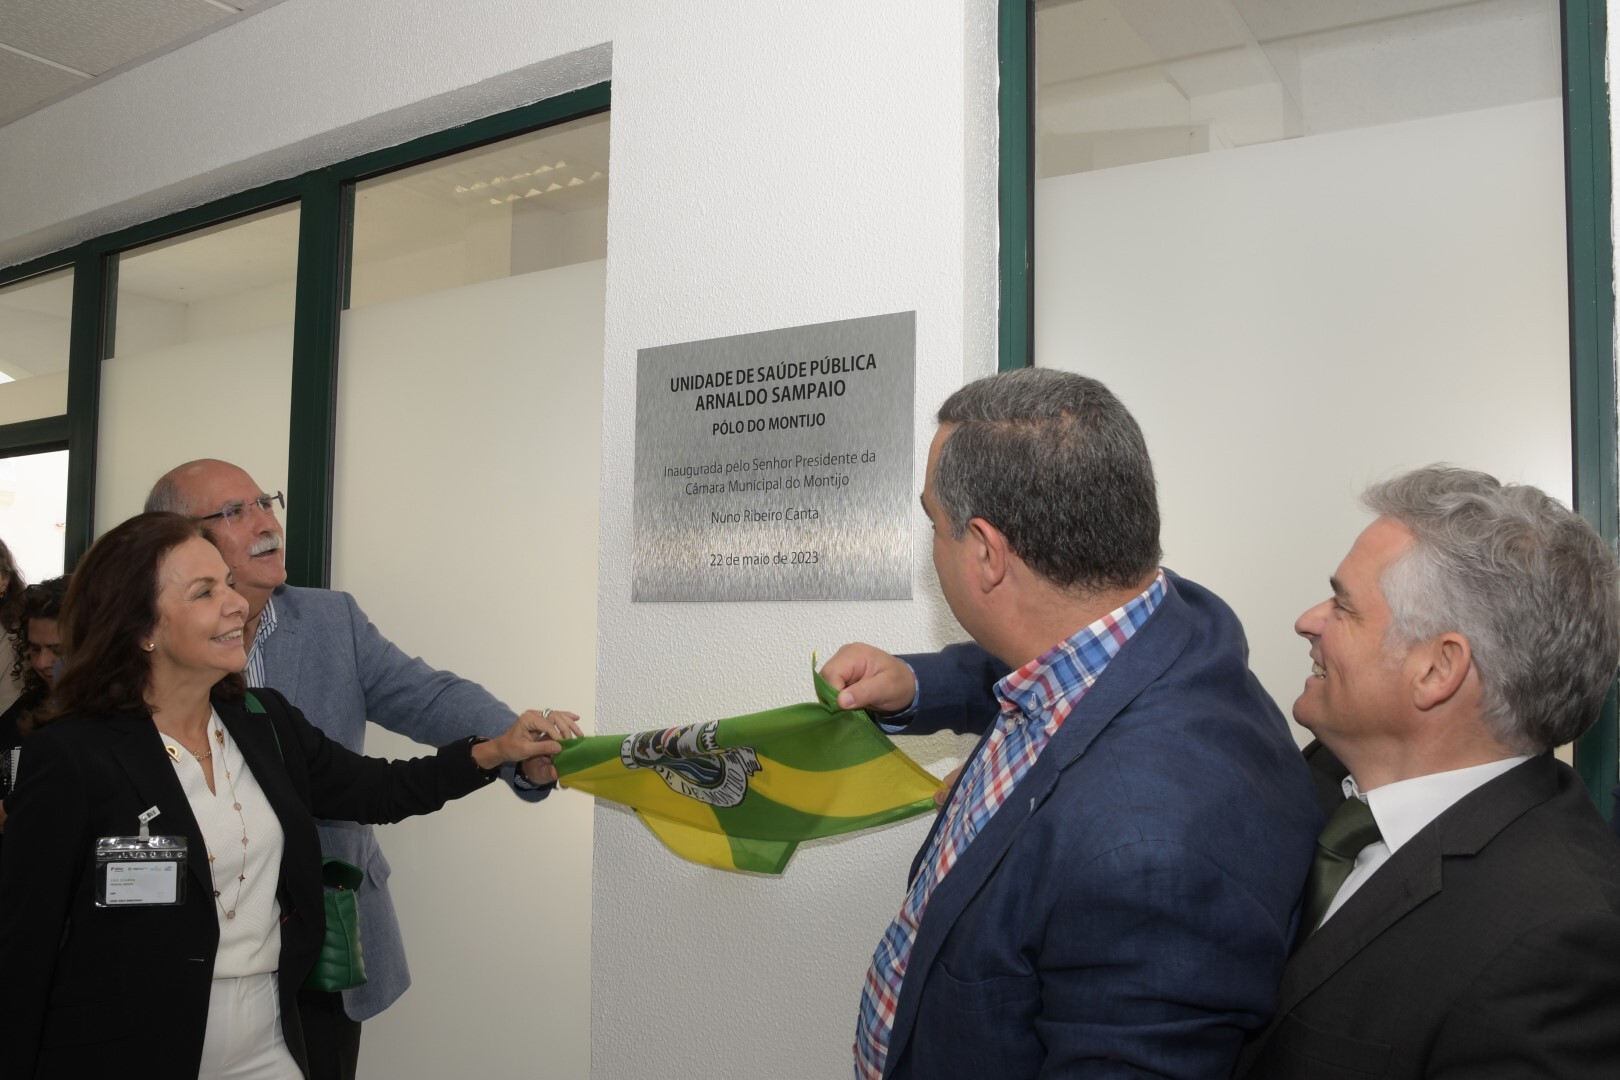 Inaugurada a Unidade de Saúde Pública Arnaldo Sampaio (USPAS) no Montijo